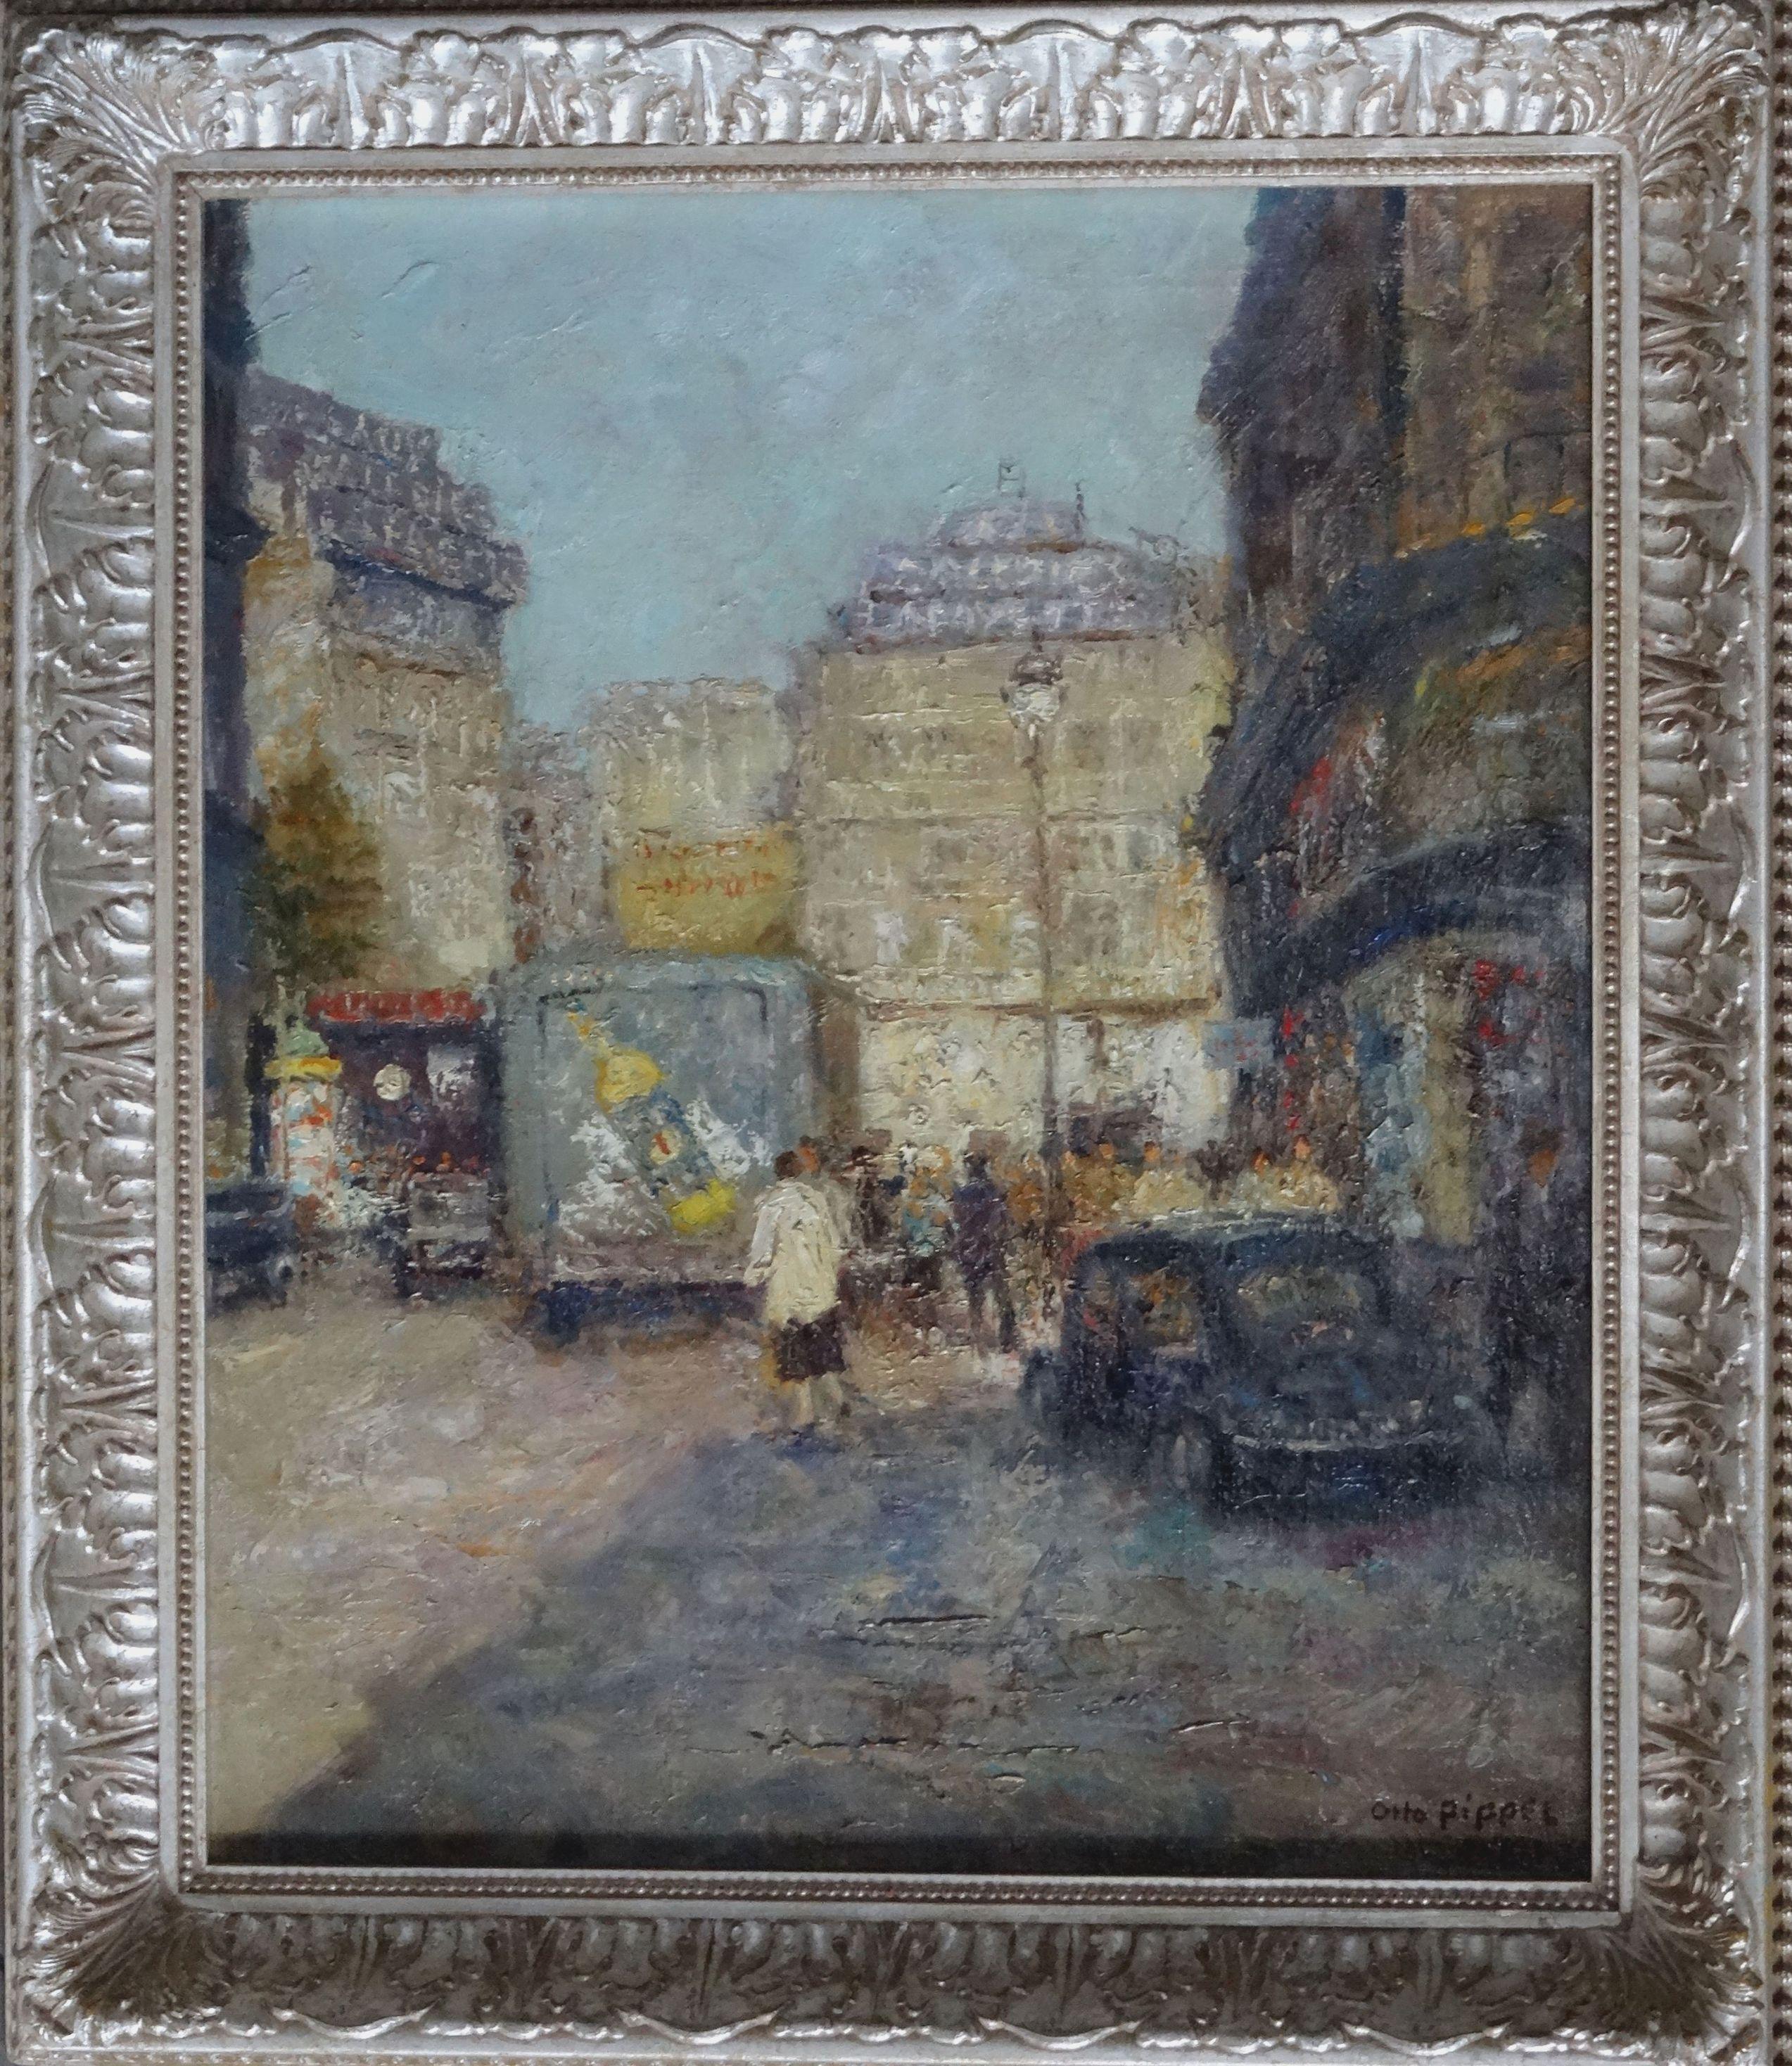 Lafayette Street, Paris. Oil on canvas, 61x50 cm - Painting by Otto Eduard Pippel